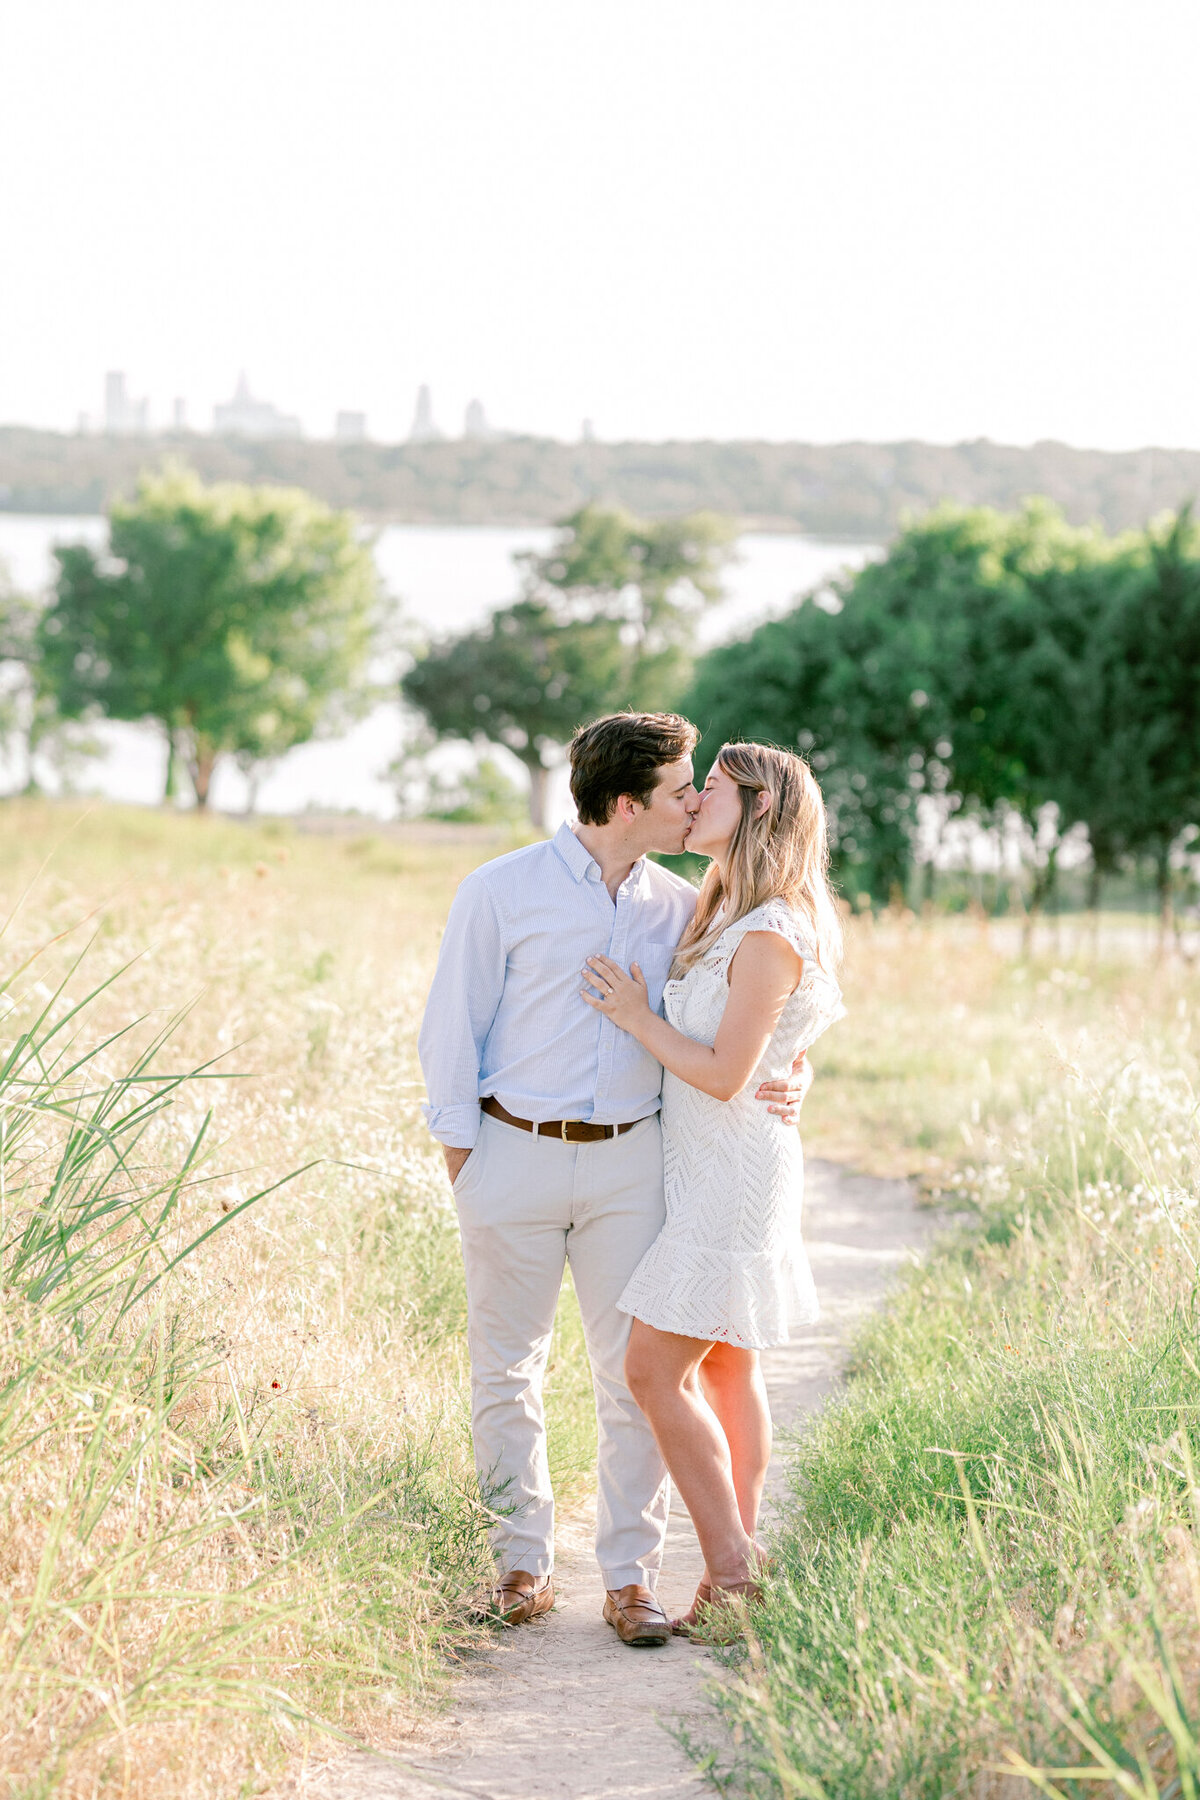 Regan & Owen's White Rock Lake Engagement Session | Dallas Wedding Photographer | Sami Kathryn Photography-17